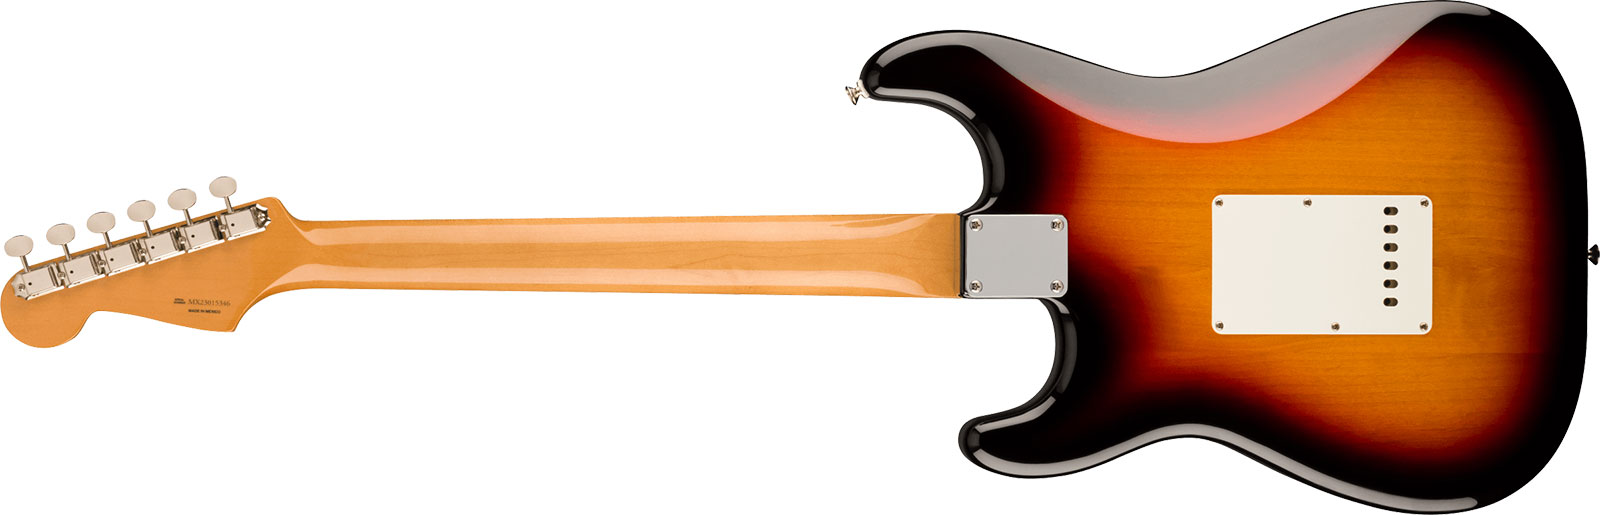 Fender Strat 60s Vintera 2 Mex 3s Trem Rw - 3-color Sunburst - E-Gitarre in Str-Form - Variation 1